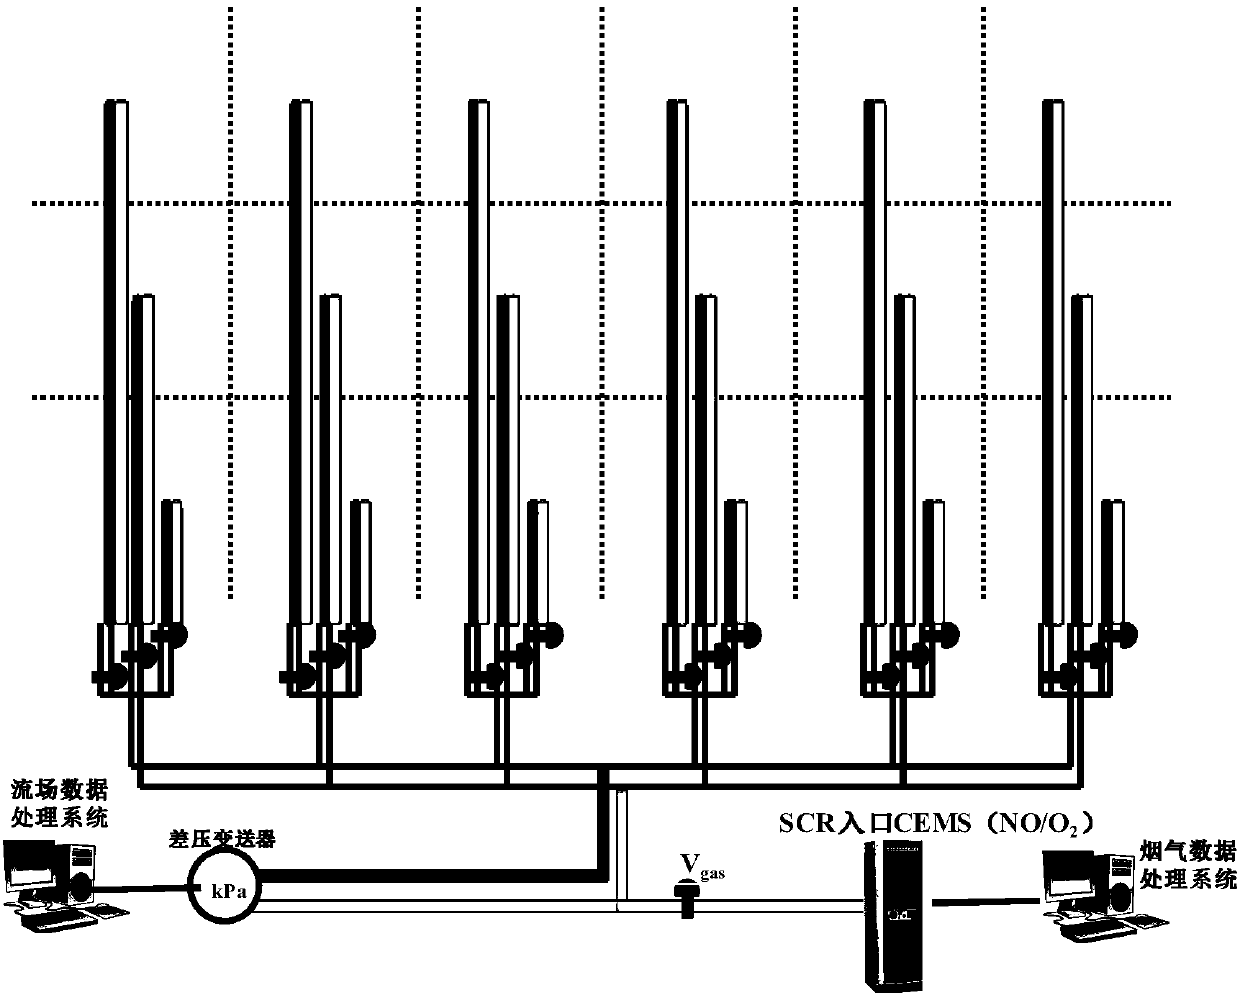 Method for optimizing ammonia nitrogen mole ratio distribution of SCR denitration system